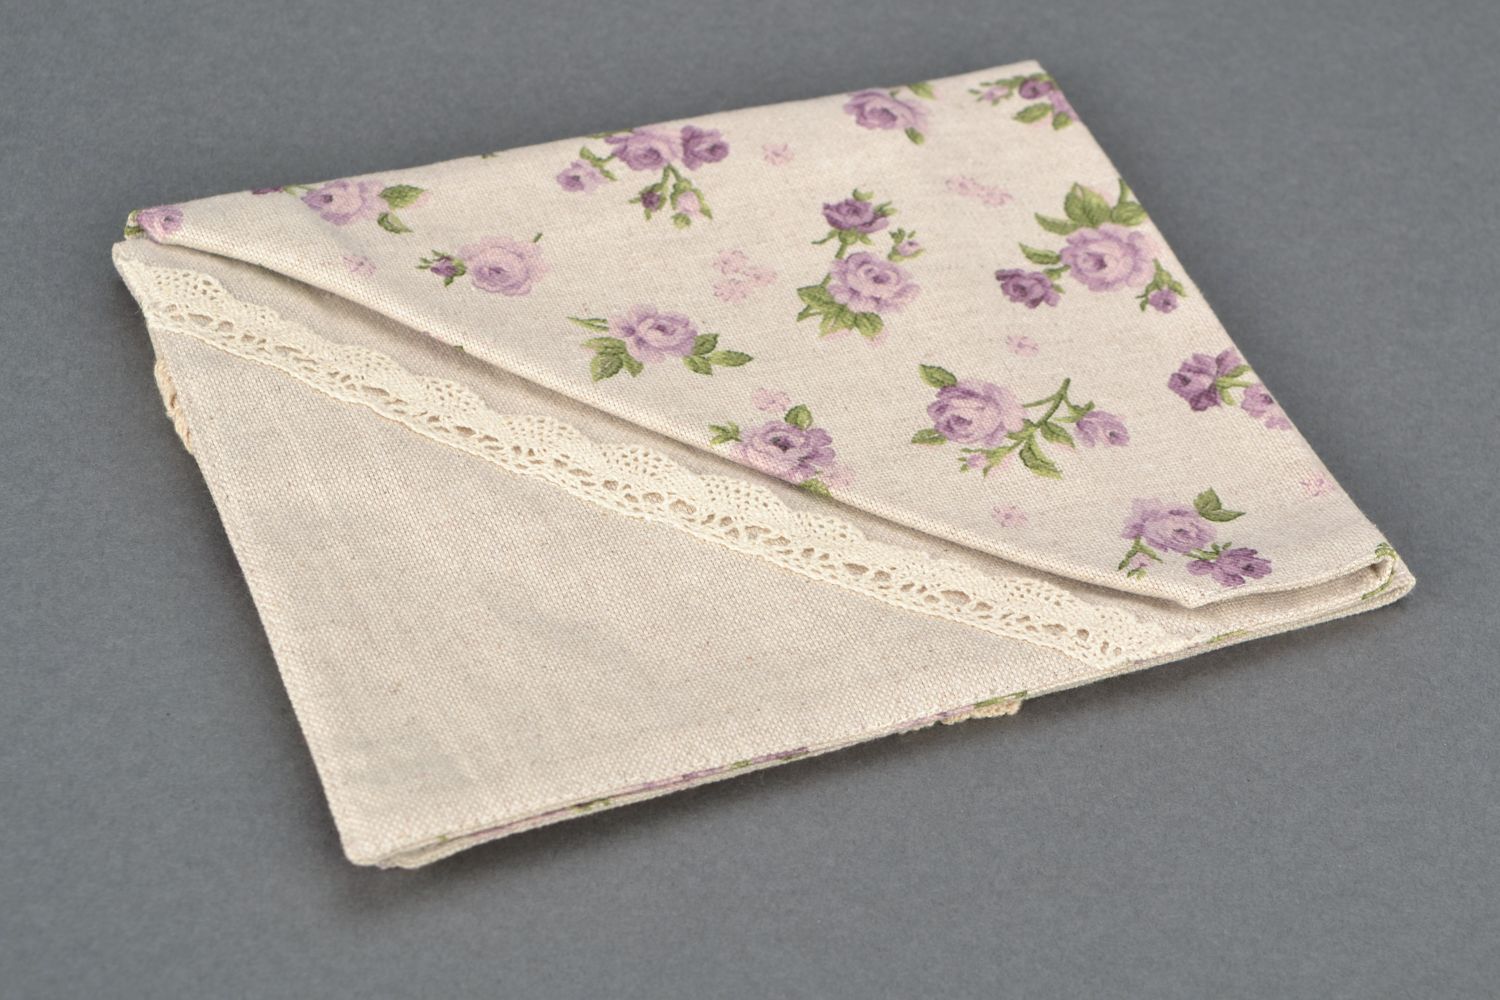 Two-sided handmade decorative fabric napkin photo 4